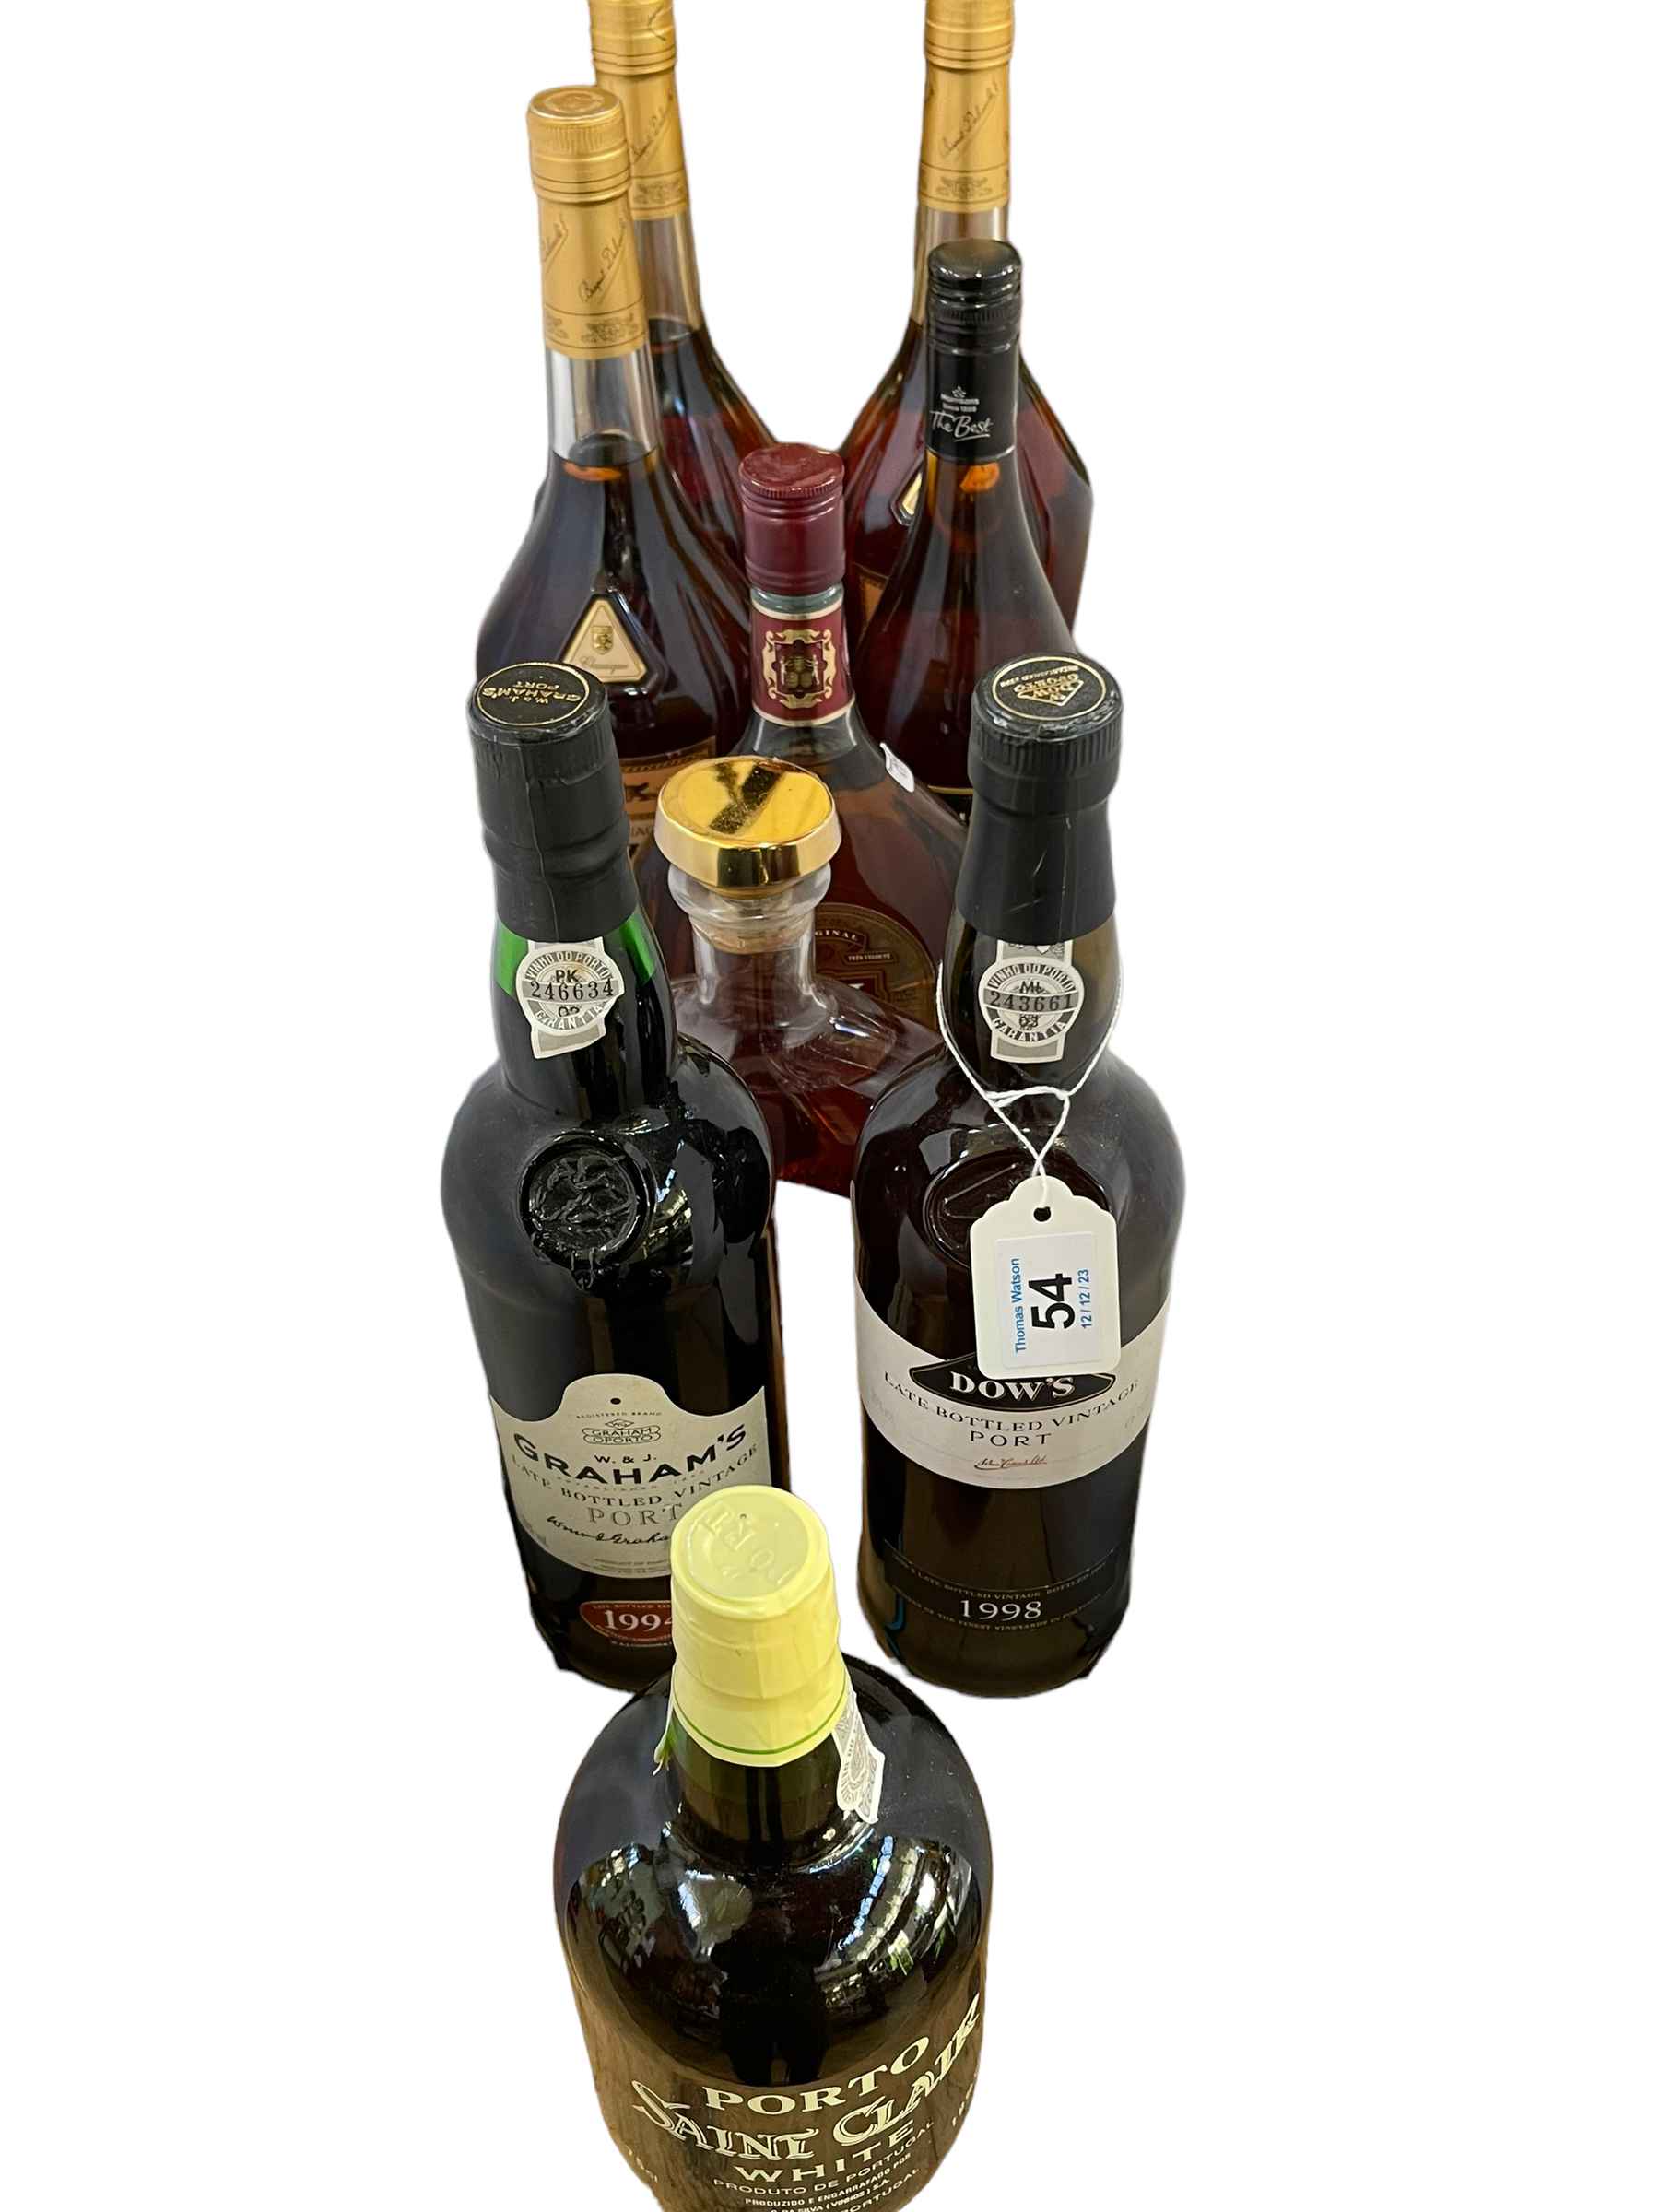 Nine bottles of spirits and wine including Domaine Tariquet 700ml, Bisquit Cognac 100cl,